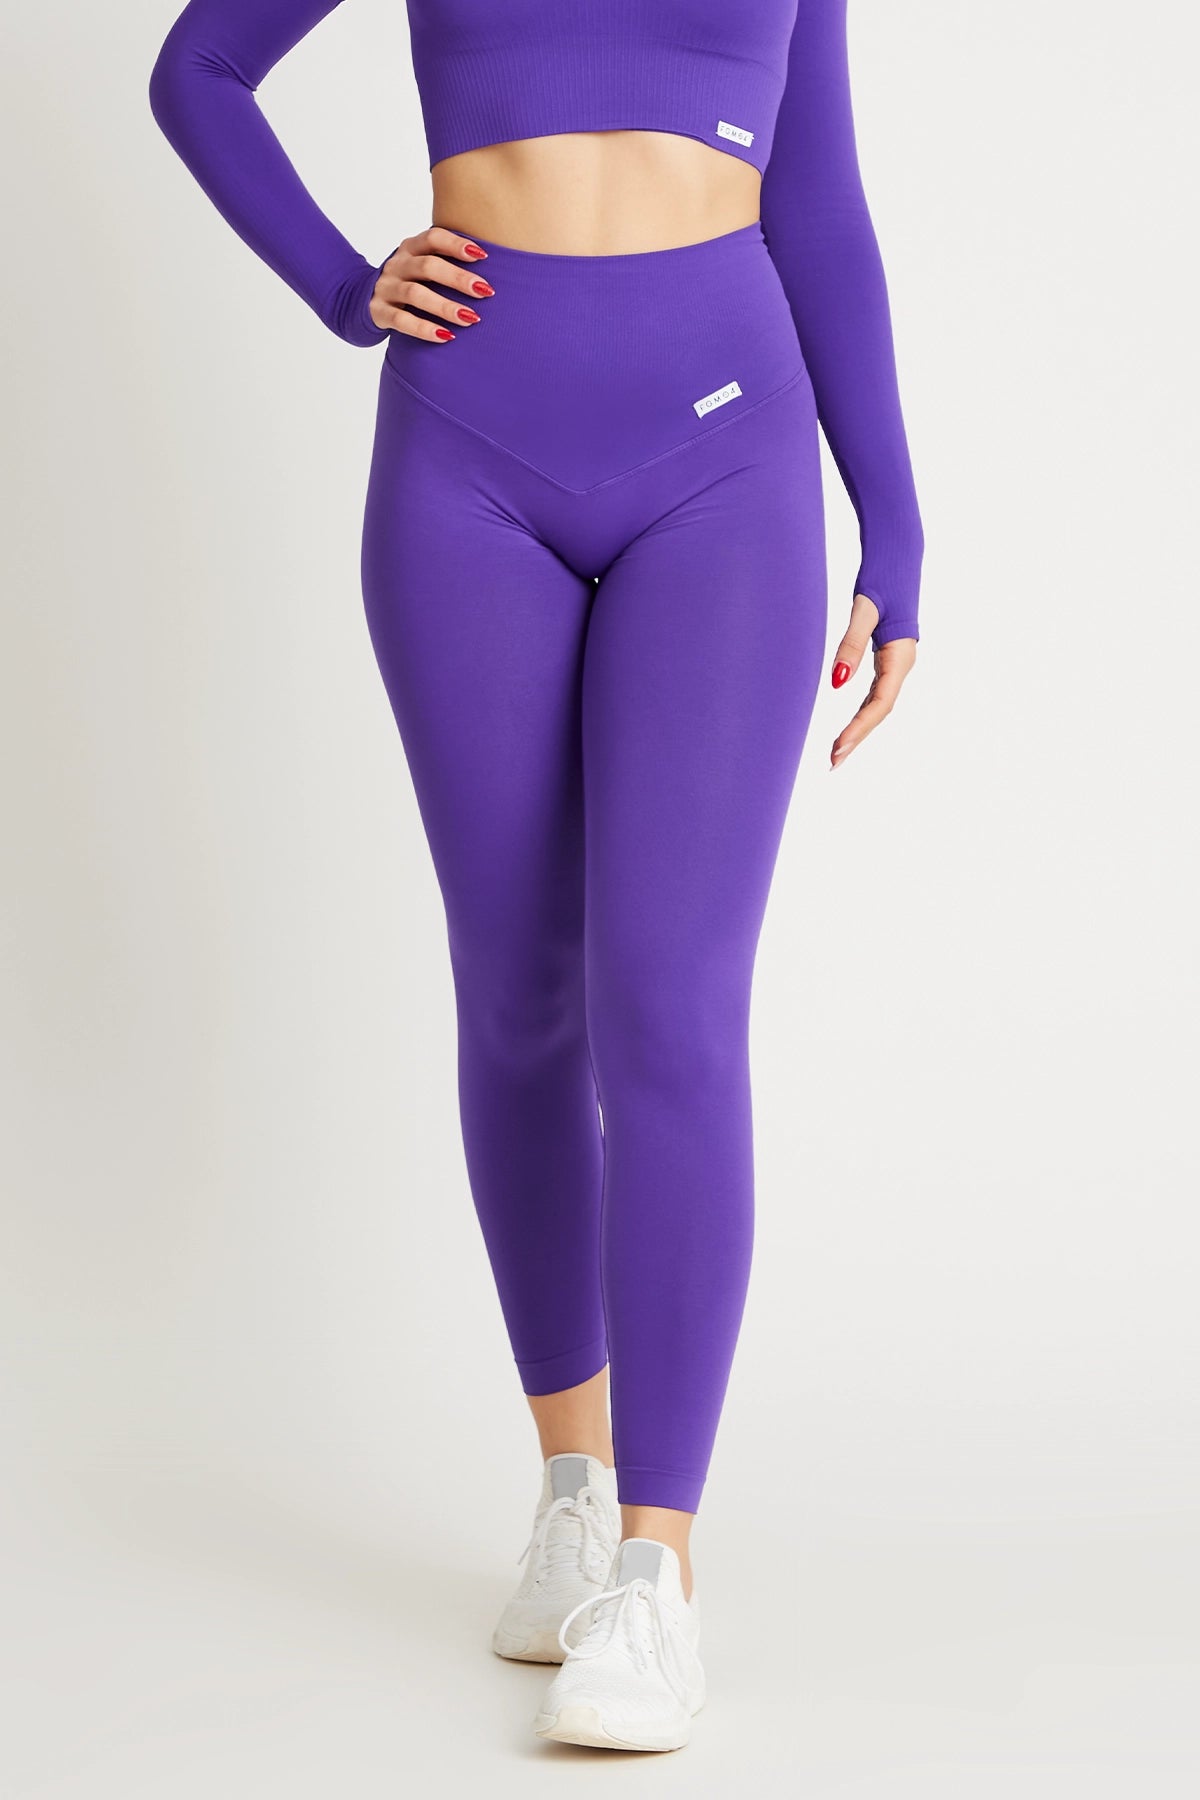 Leggings All Up e Top Gym Fashion violet di FGM04